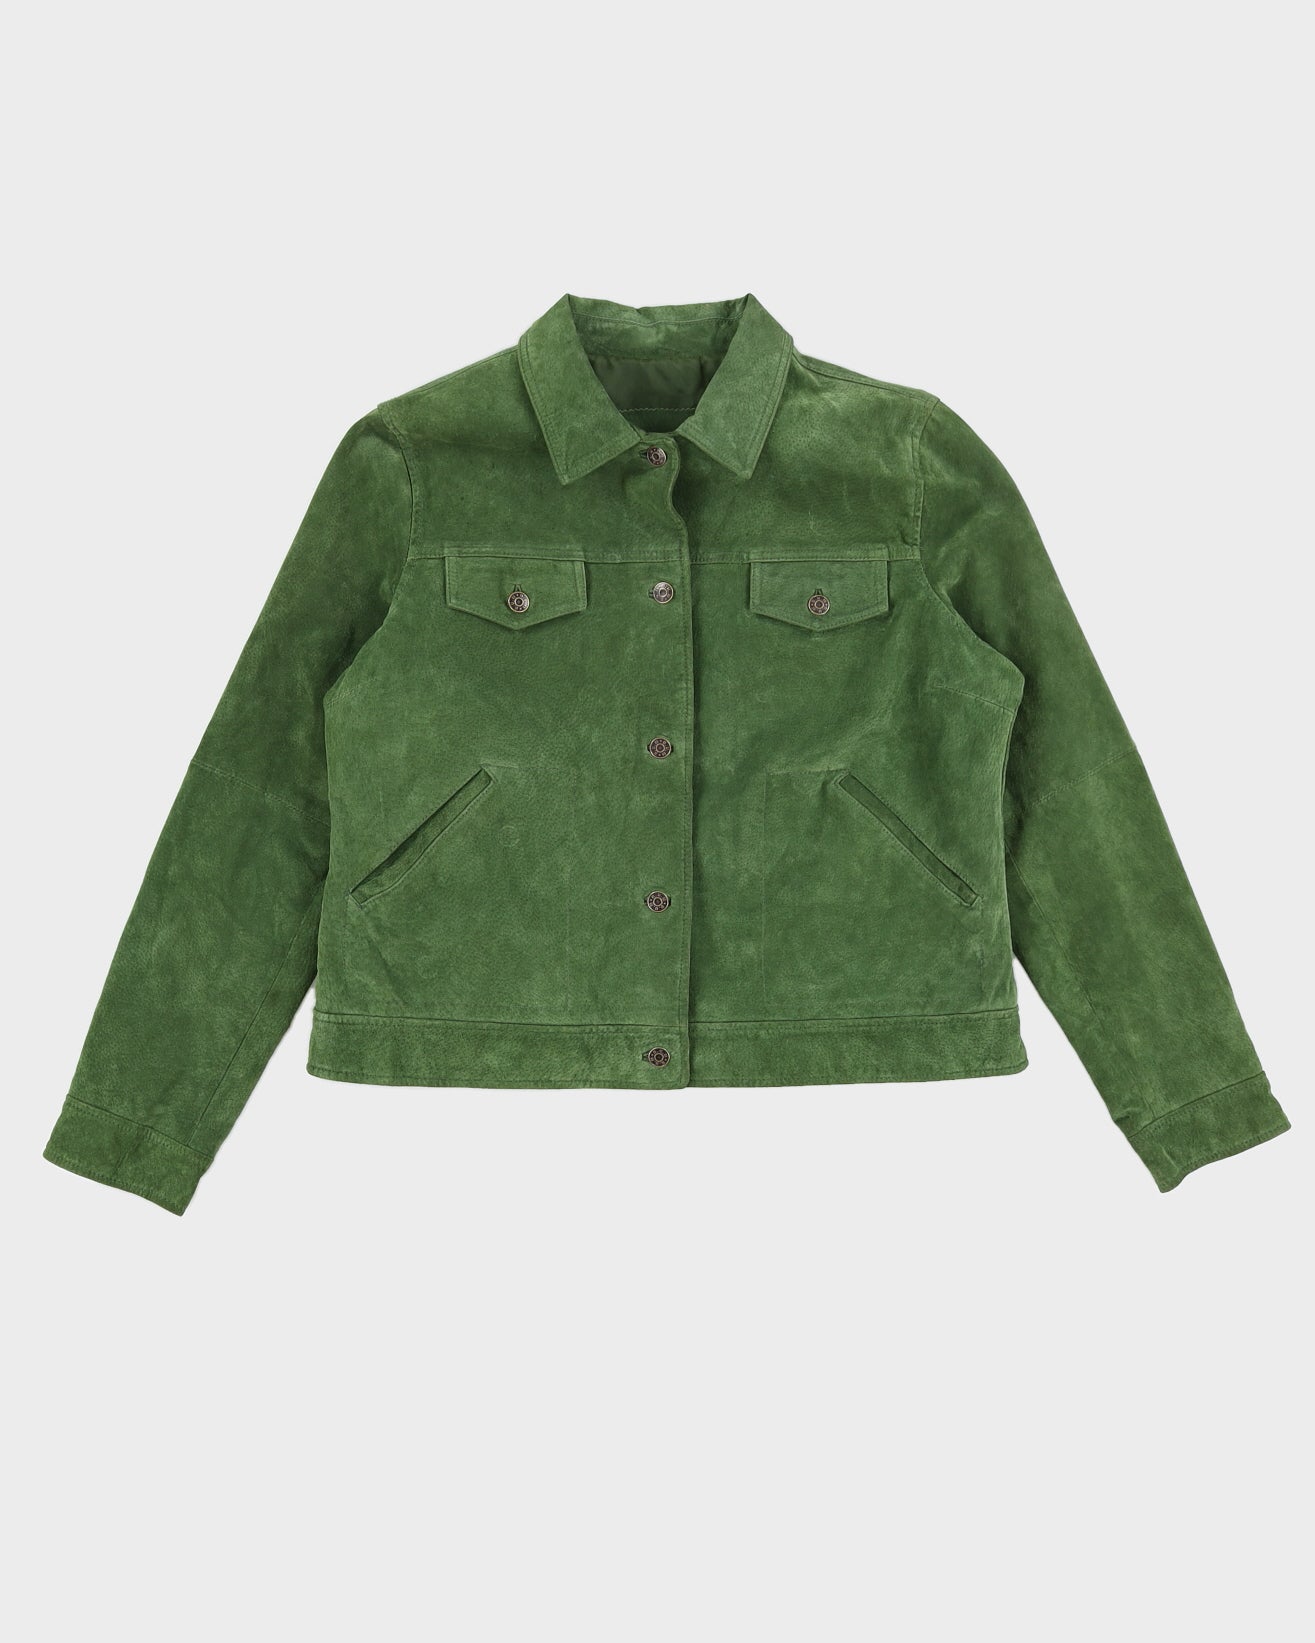 Vintage 90s B.U.M Equipment Suede Green Jacket - XL